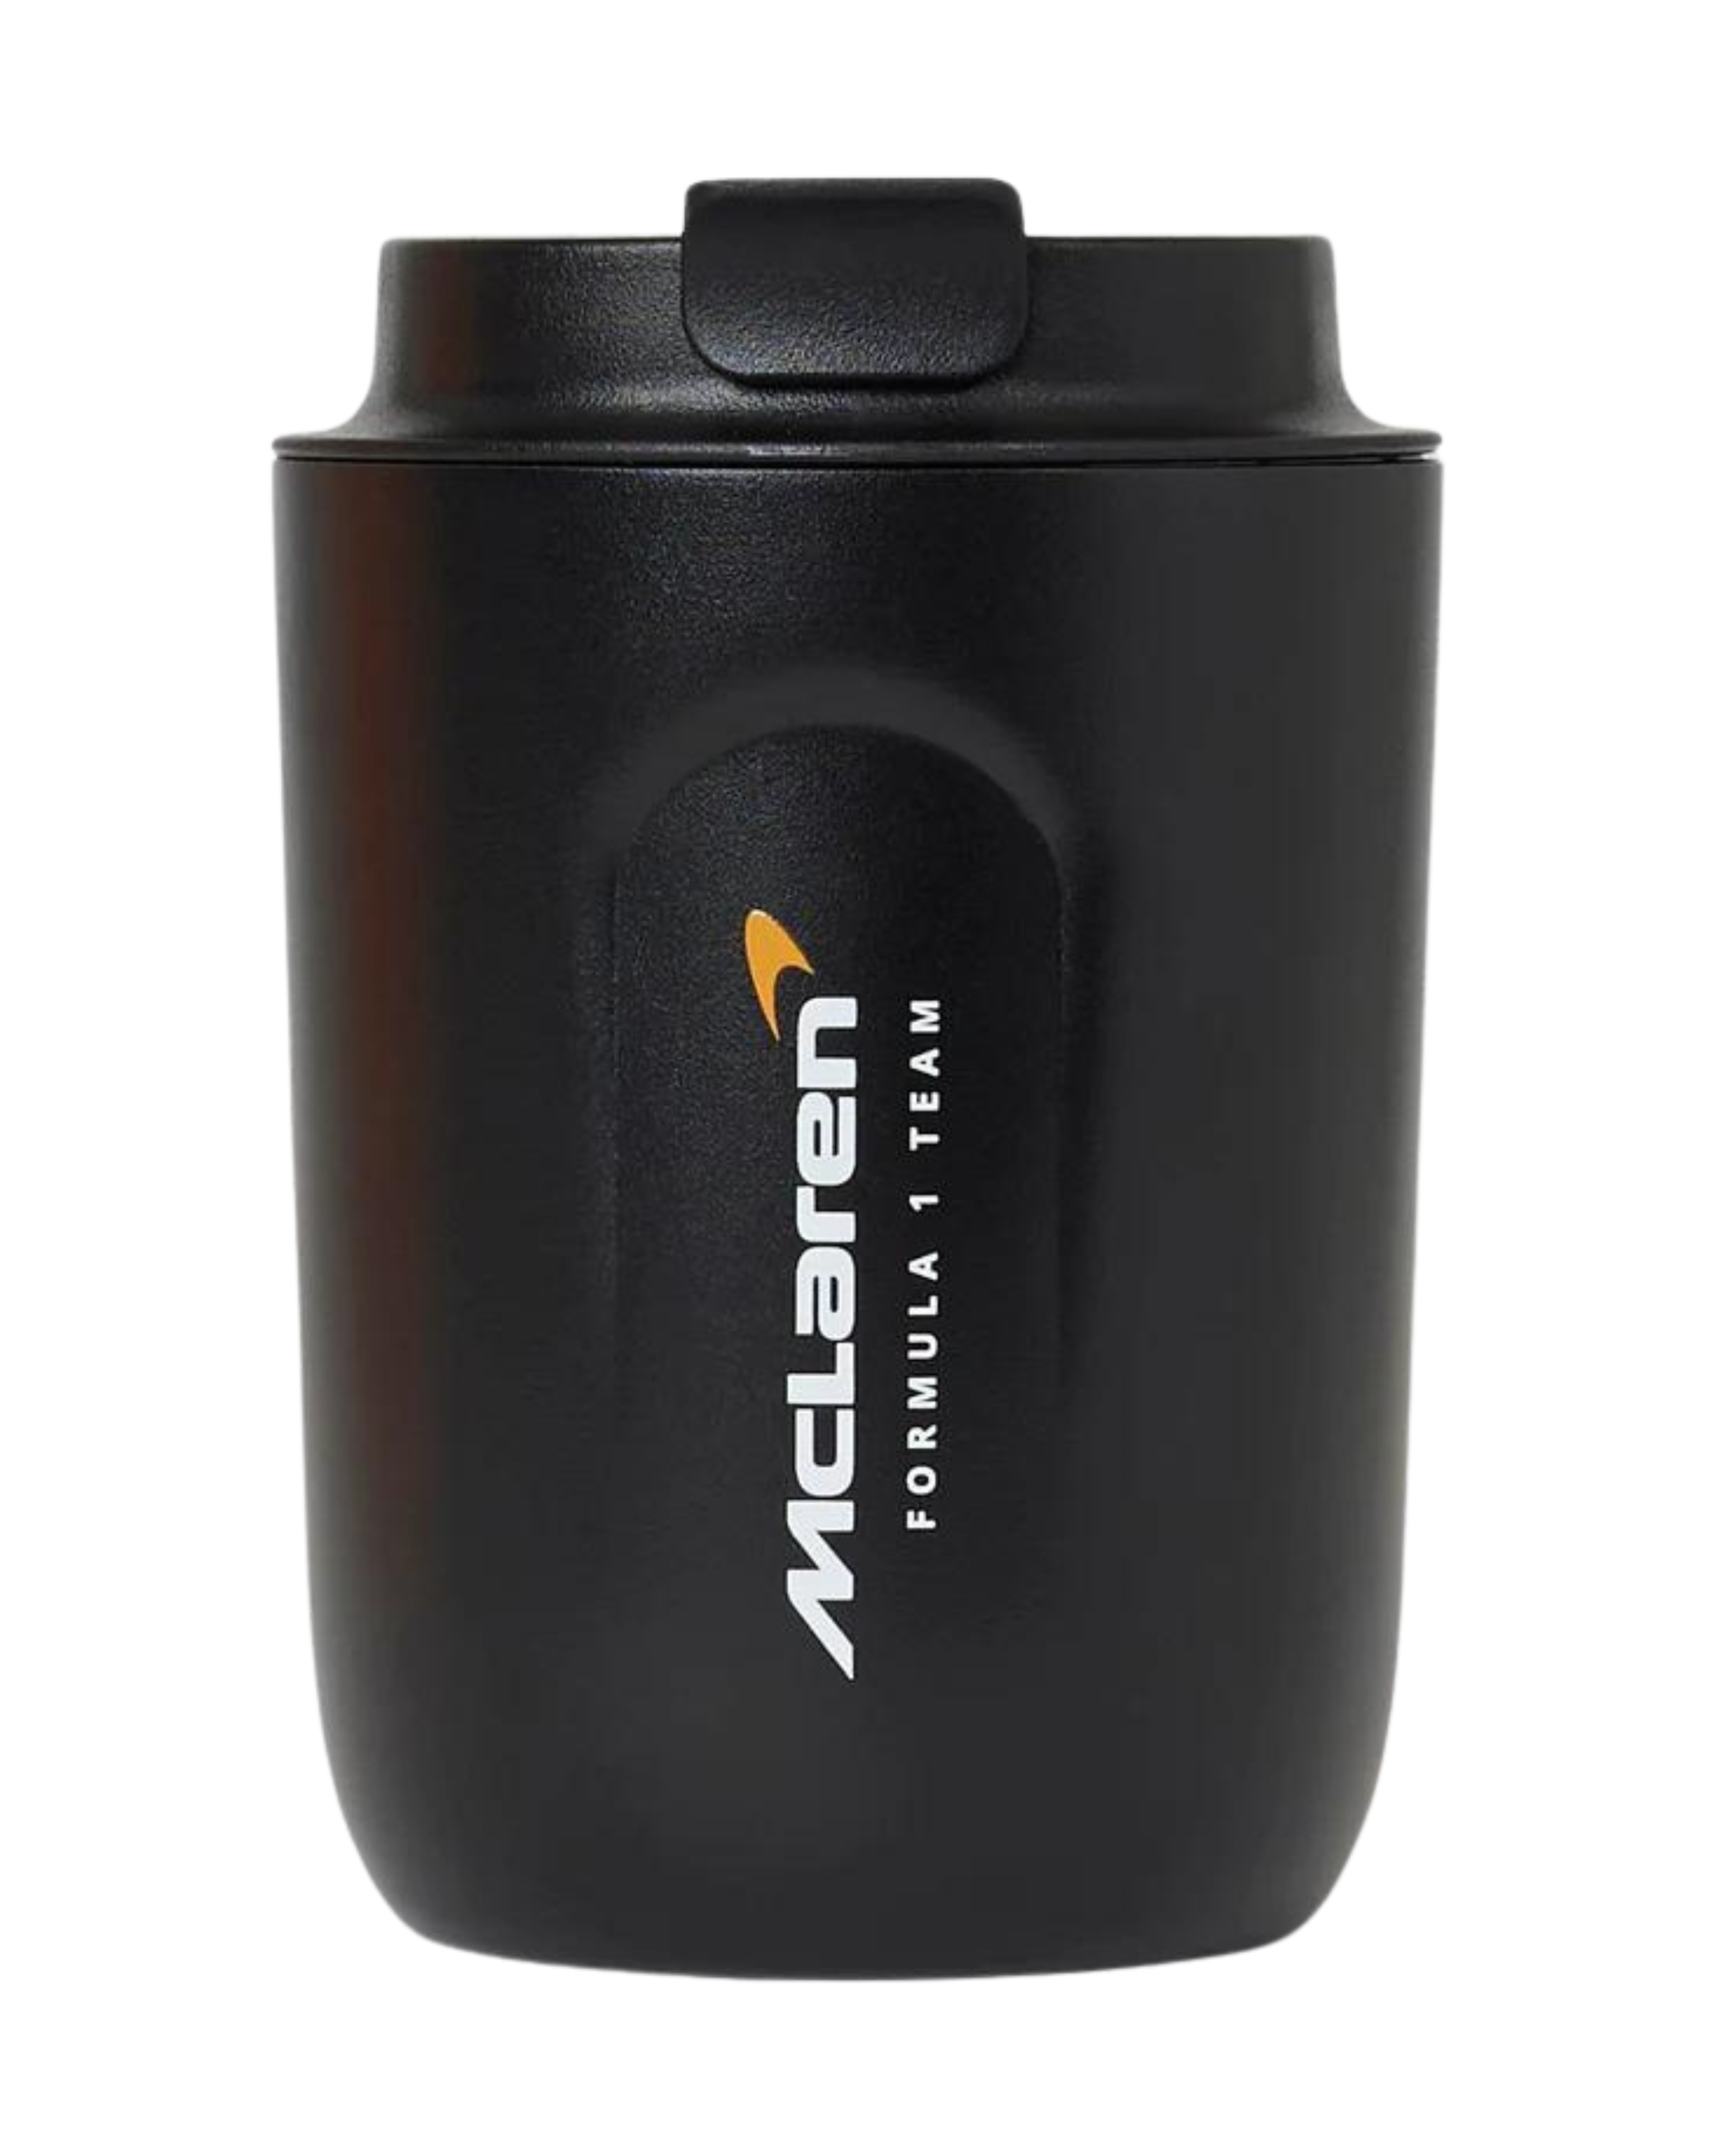 McLaren F1 Travel Coffee Mug - Anthracite